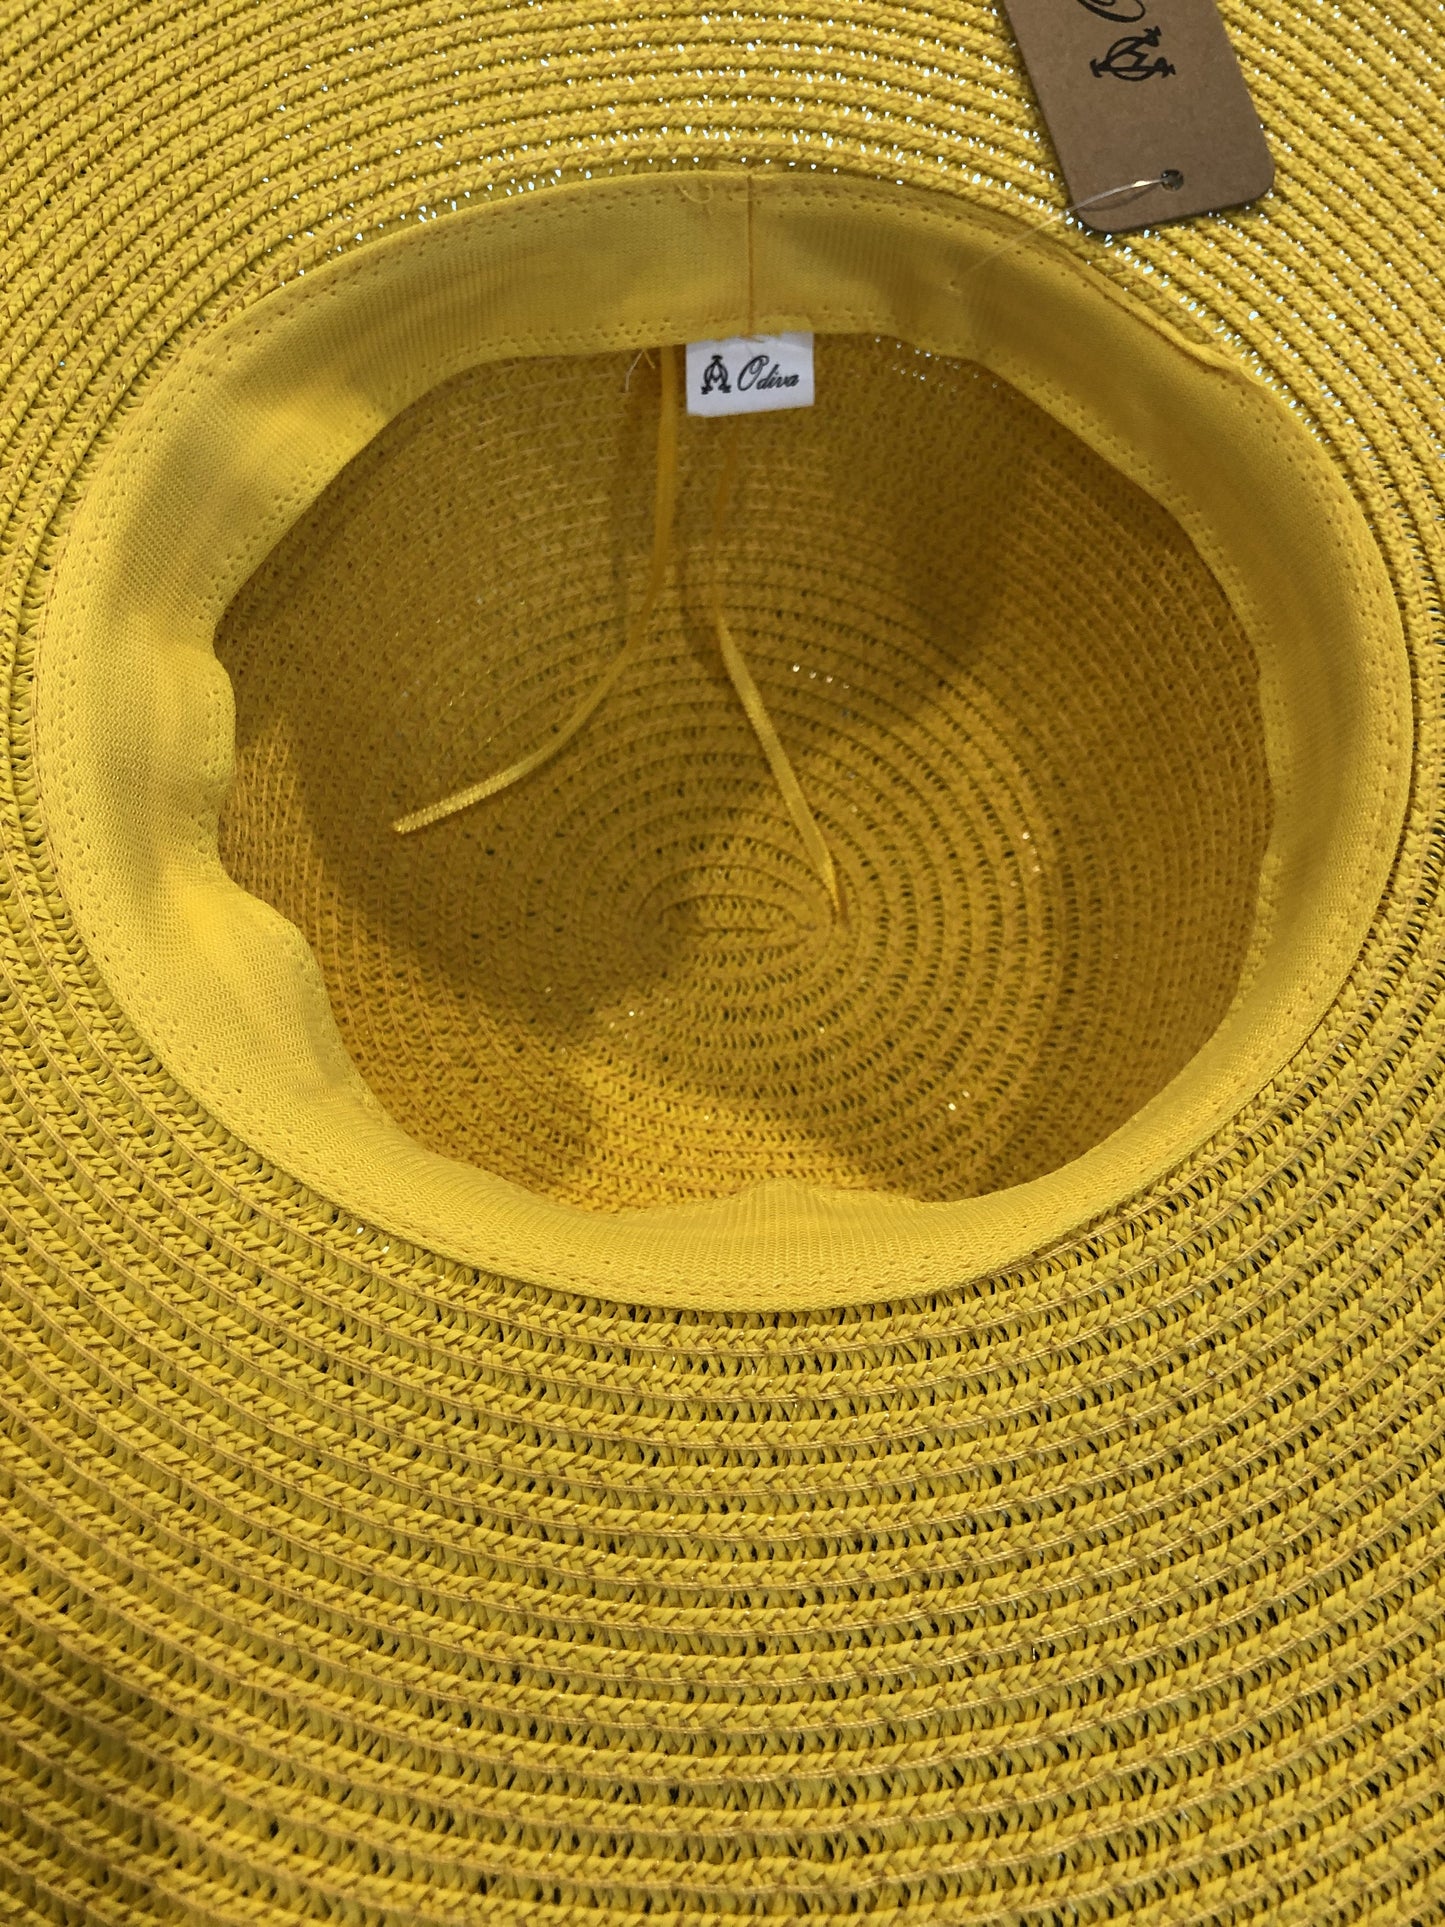 Adjustable Mustard Straw Hat